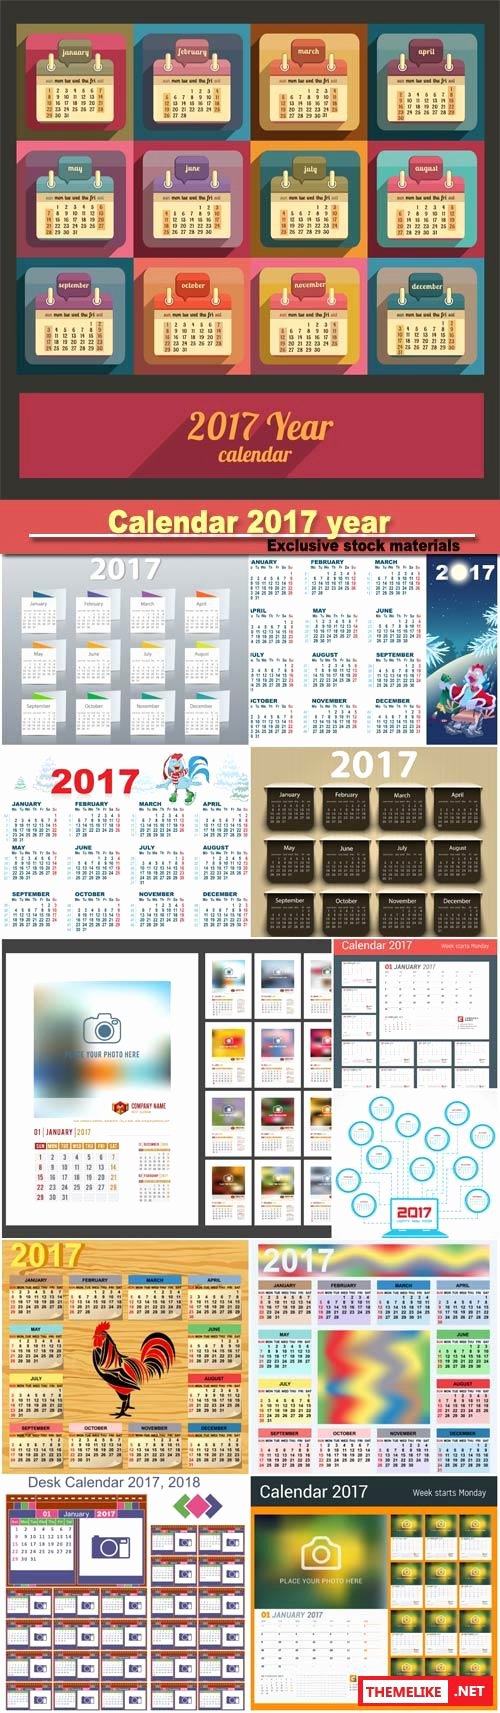 Photoshop Calendar Template 2017 Beautiful Calendar 2017 Year Vector Design Template All Design